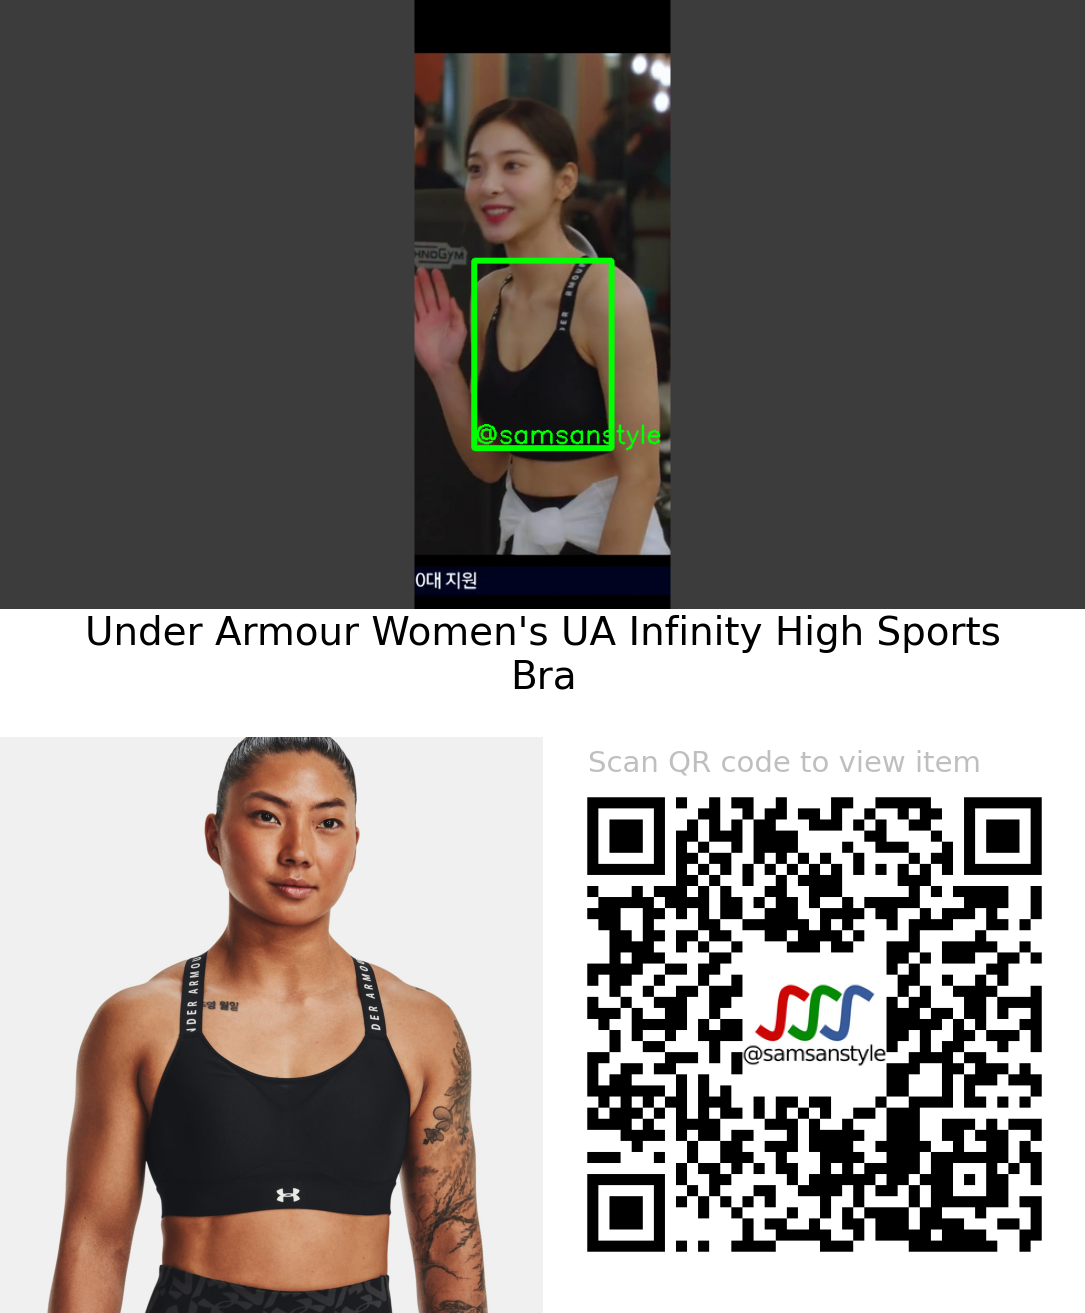 Under Armour Women's Infinity High Sports Bra